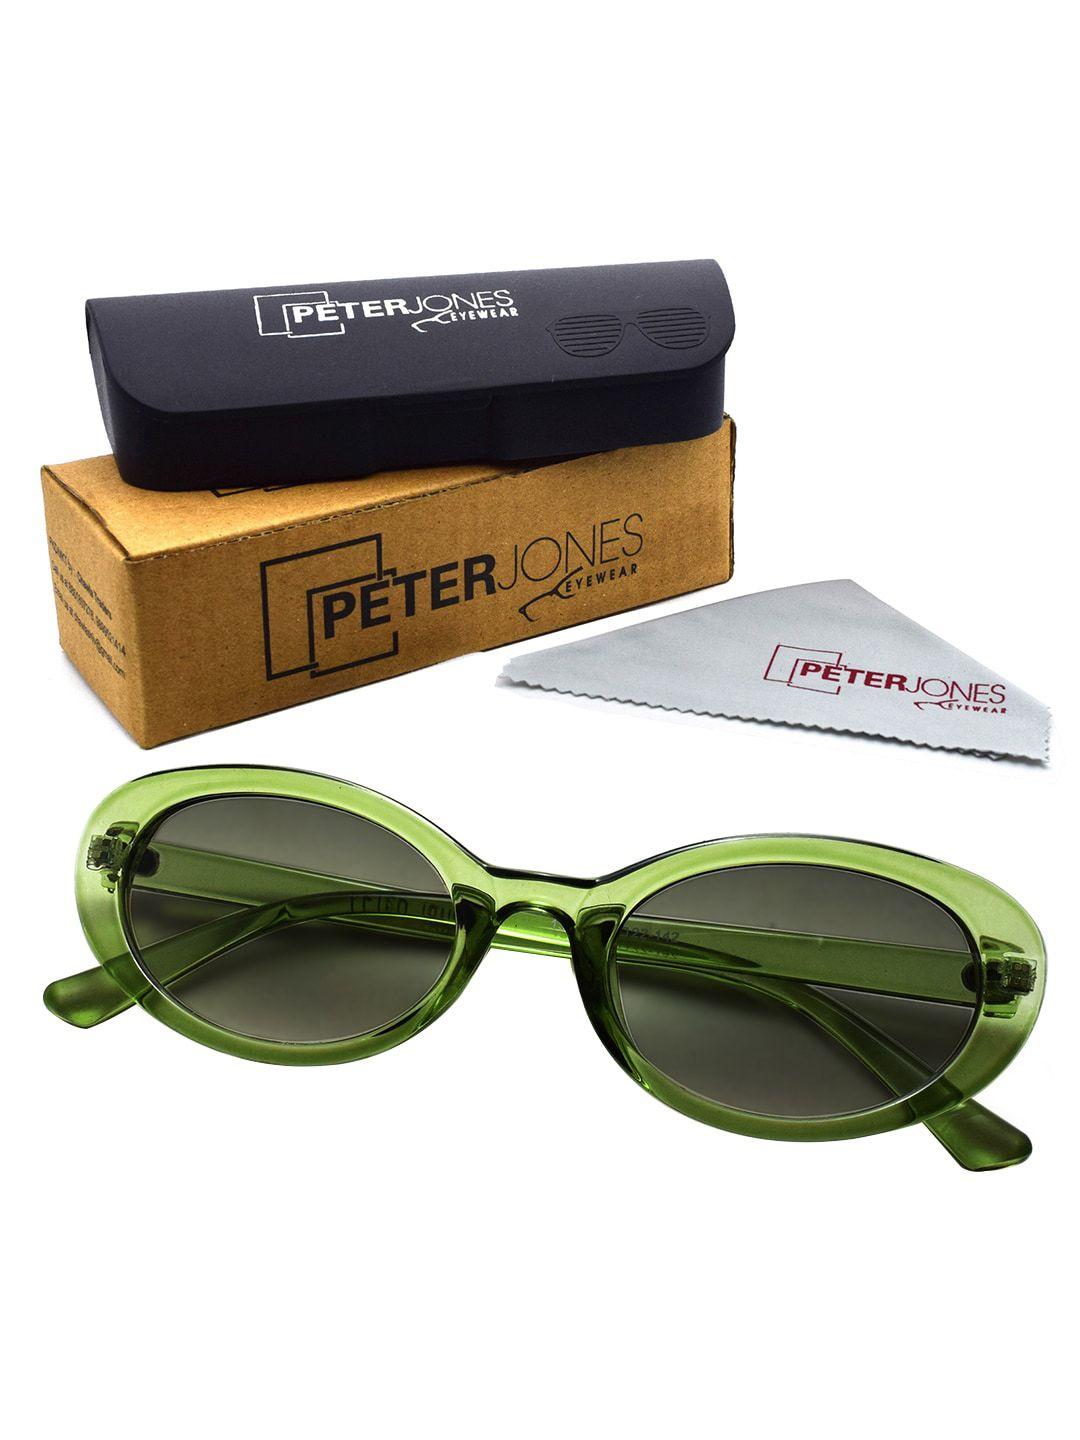 peter jones eyewear cateye sunglasses with uv protected lens 13026tgr